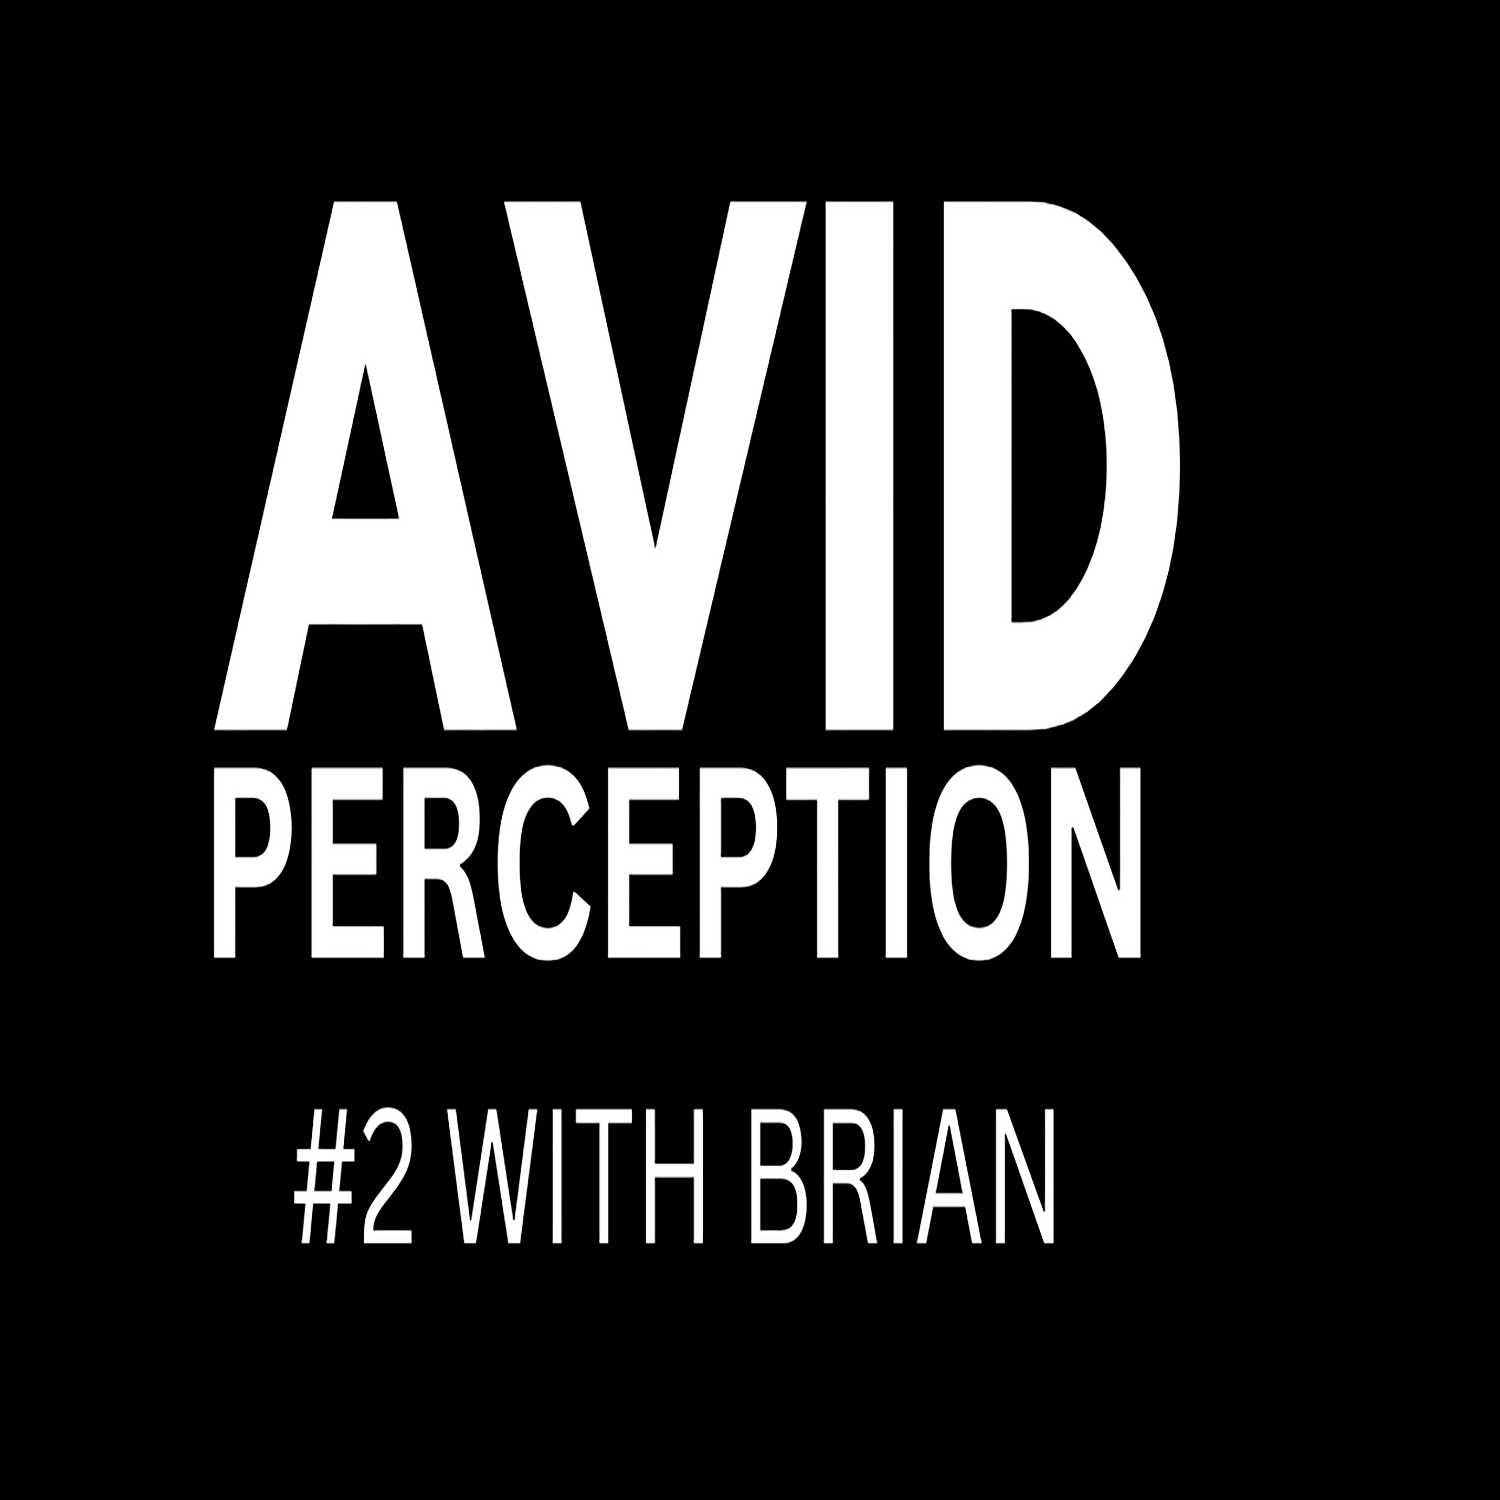 #2 - AVID PERCEPTION WITH BRIAN